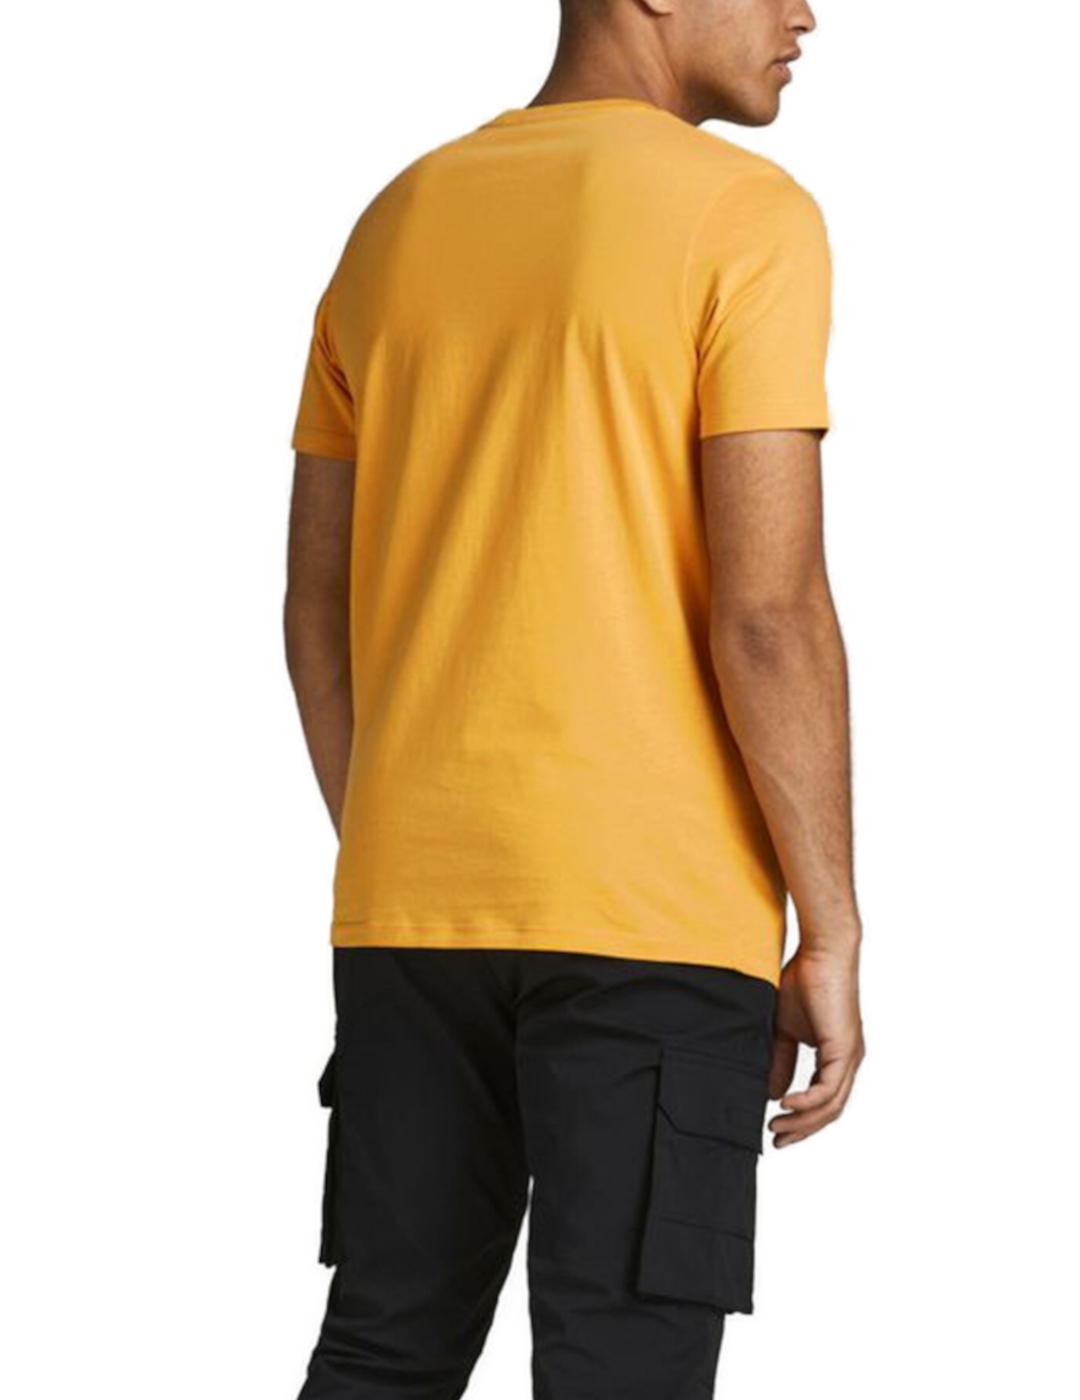 Camiseta Jack-Jones slim logo amarillo hombre-z